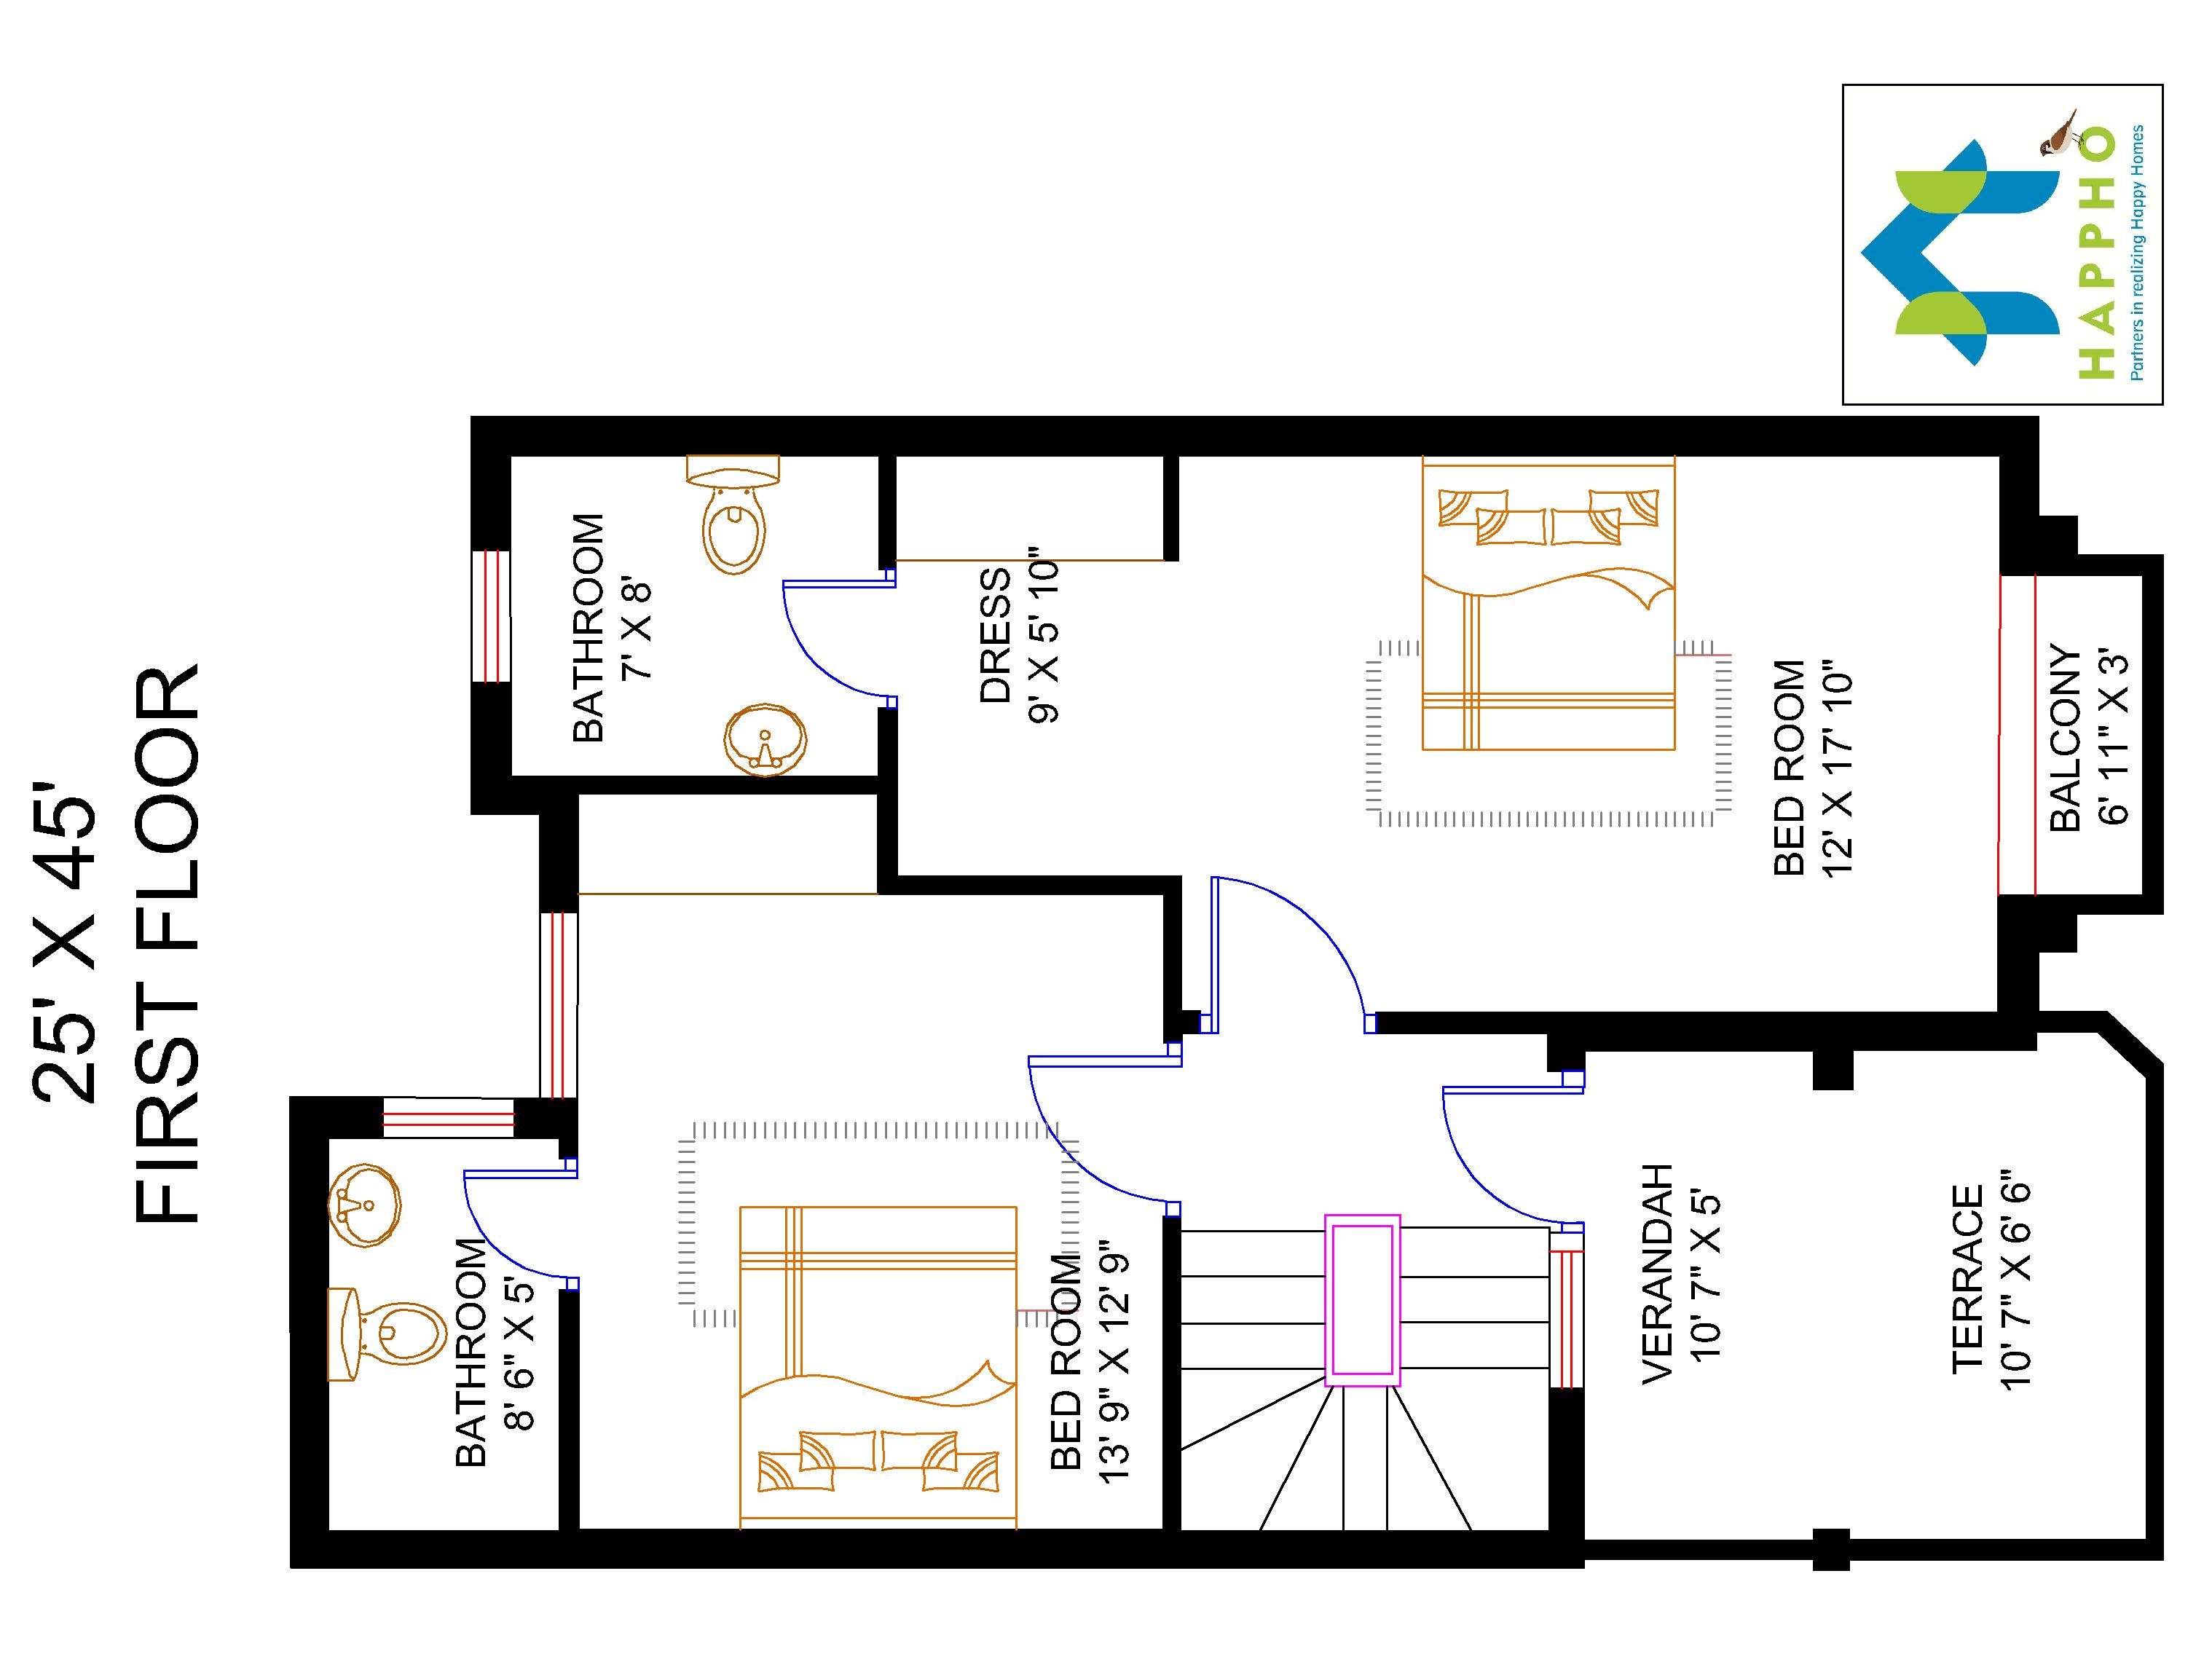 Floor Plan for 25 X 45 Feet Plot 3BHK (1125 Square Feet